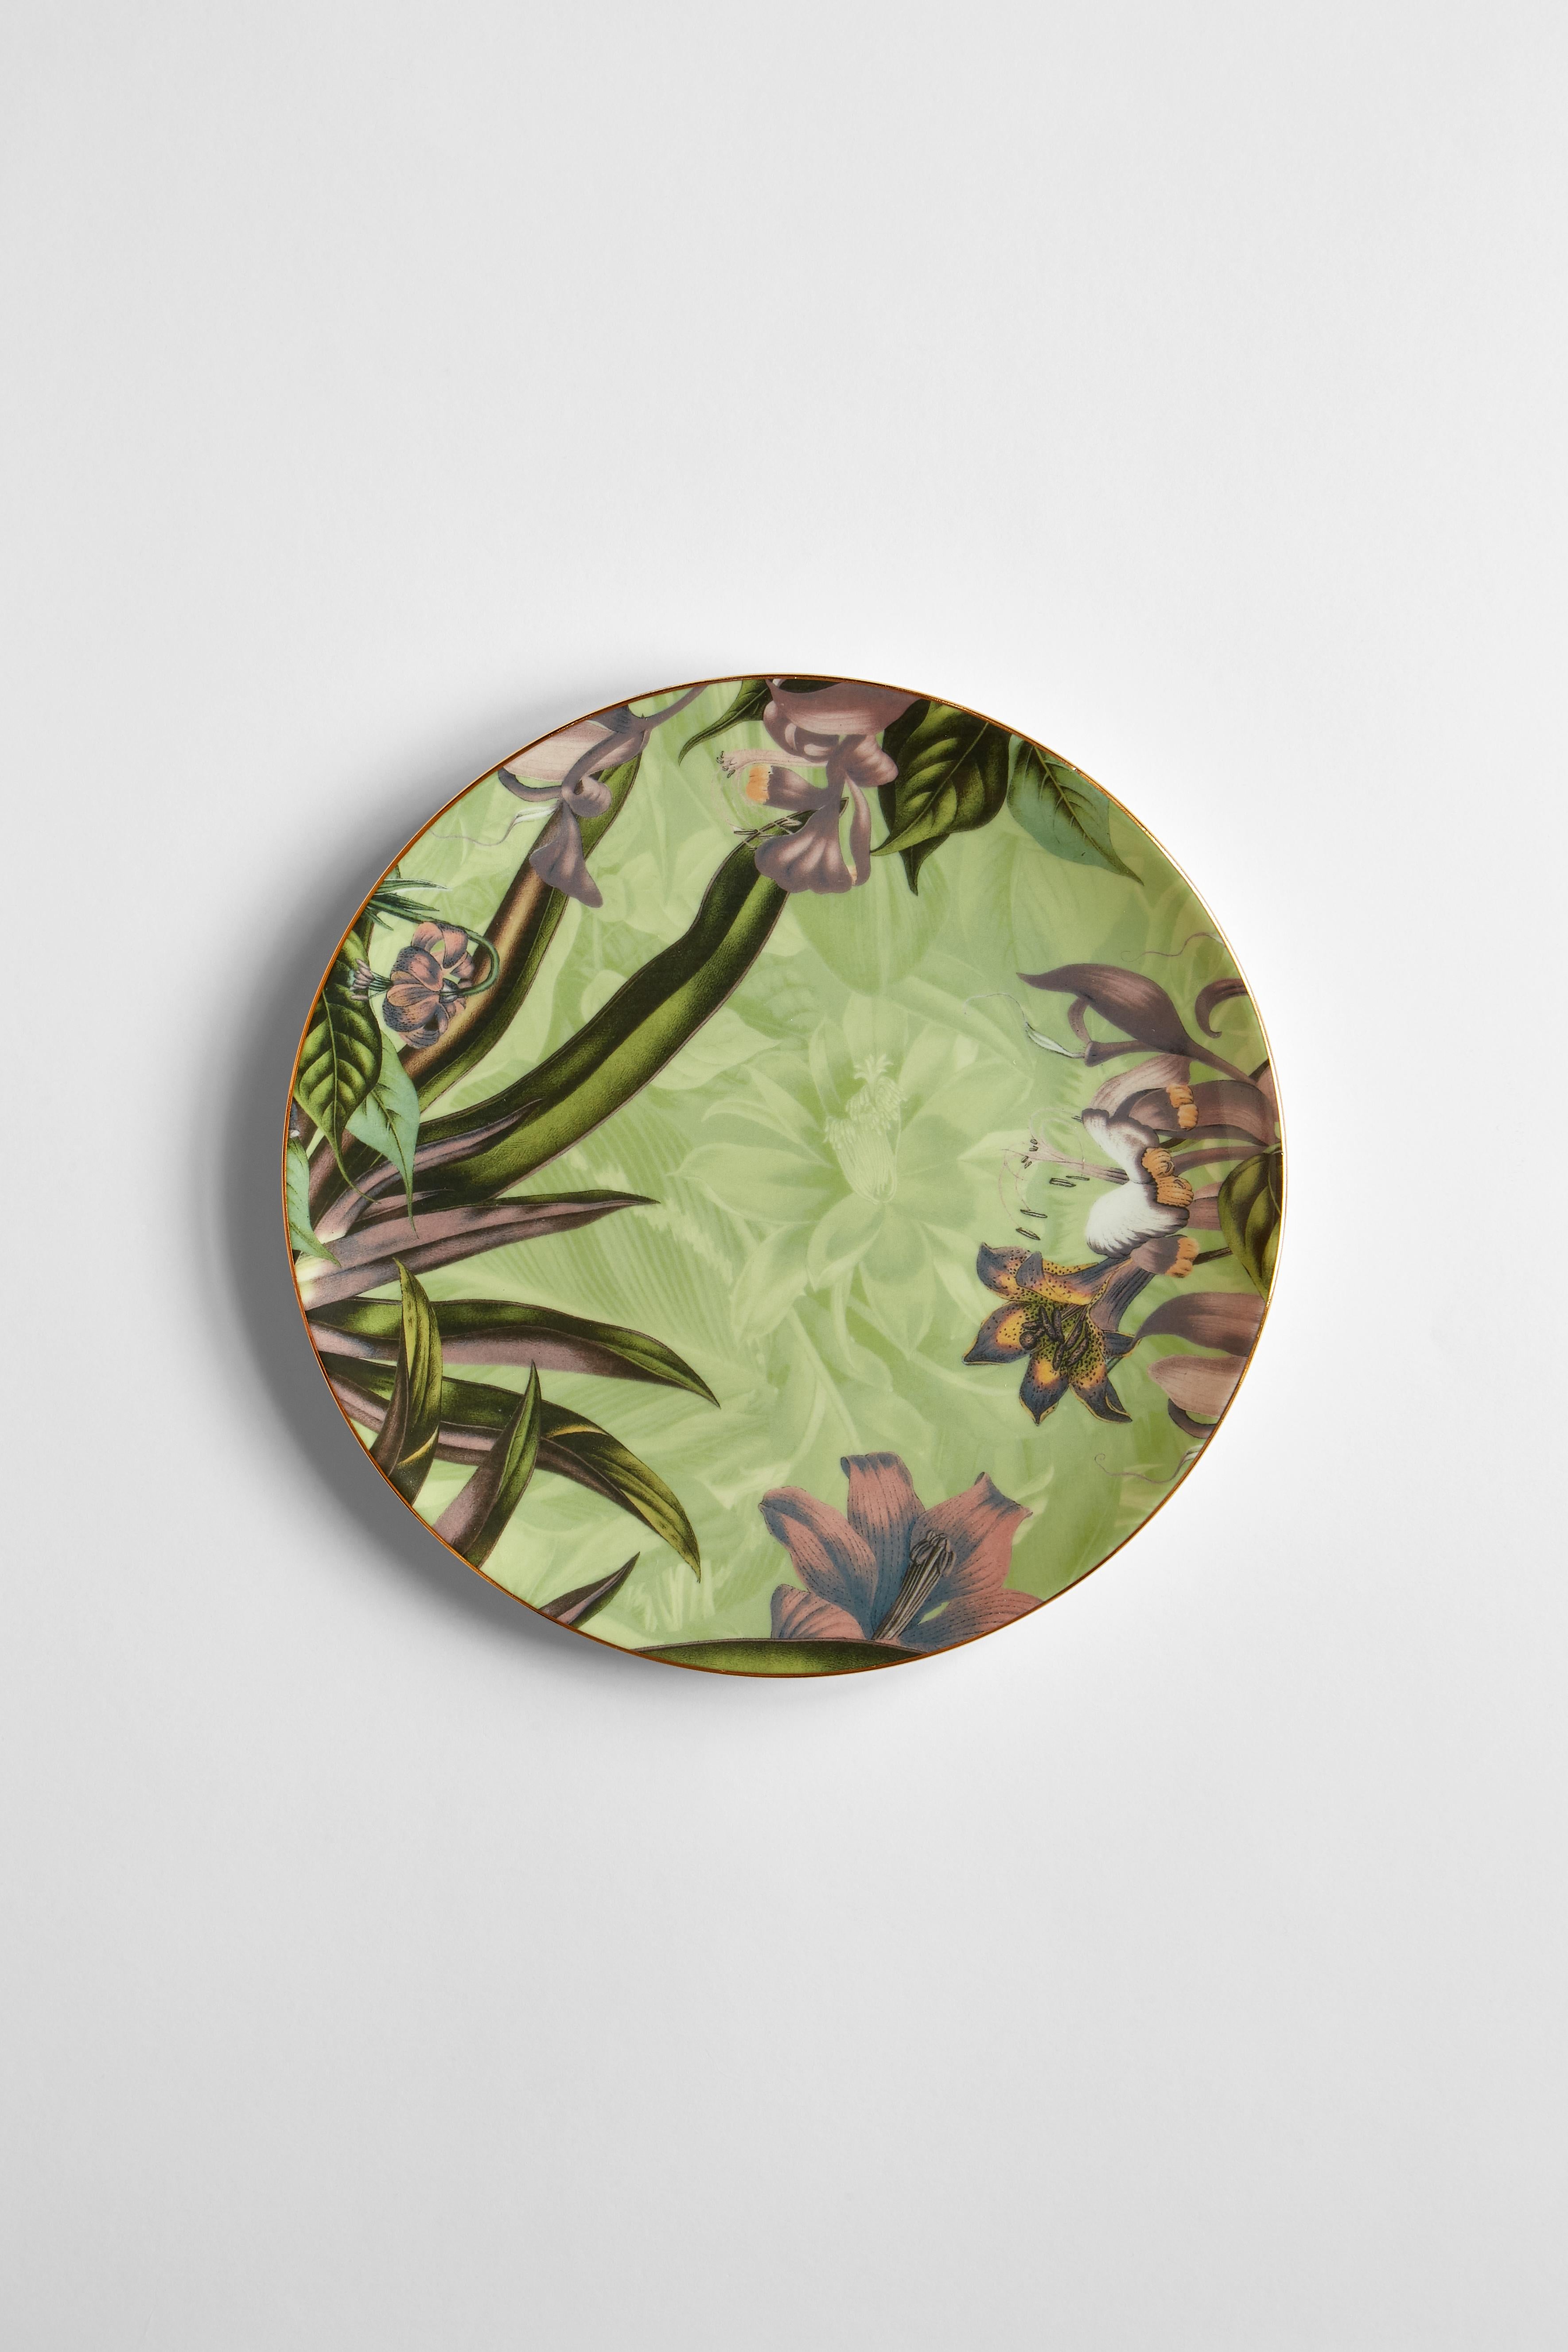 Animalia, Six Contemporary Porcelain Dessert Plates with Decorative Design In New Condition For Sale In Milano, Lombardia